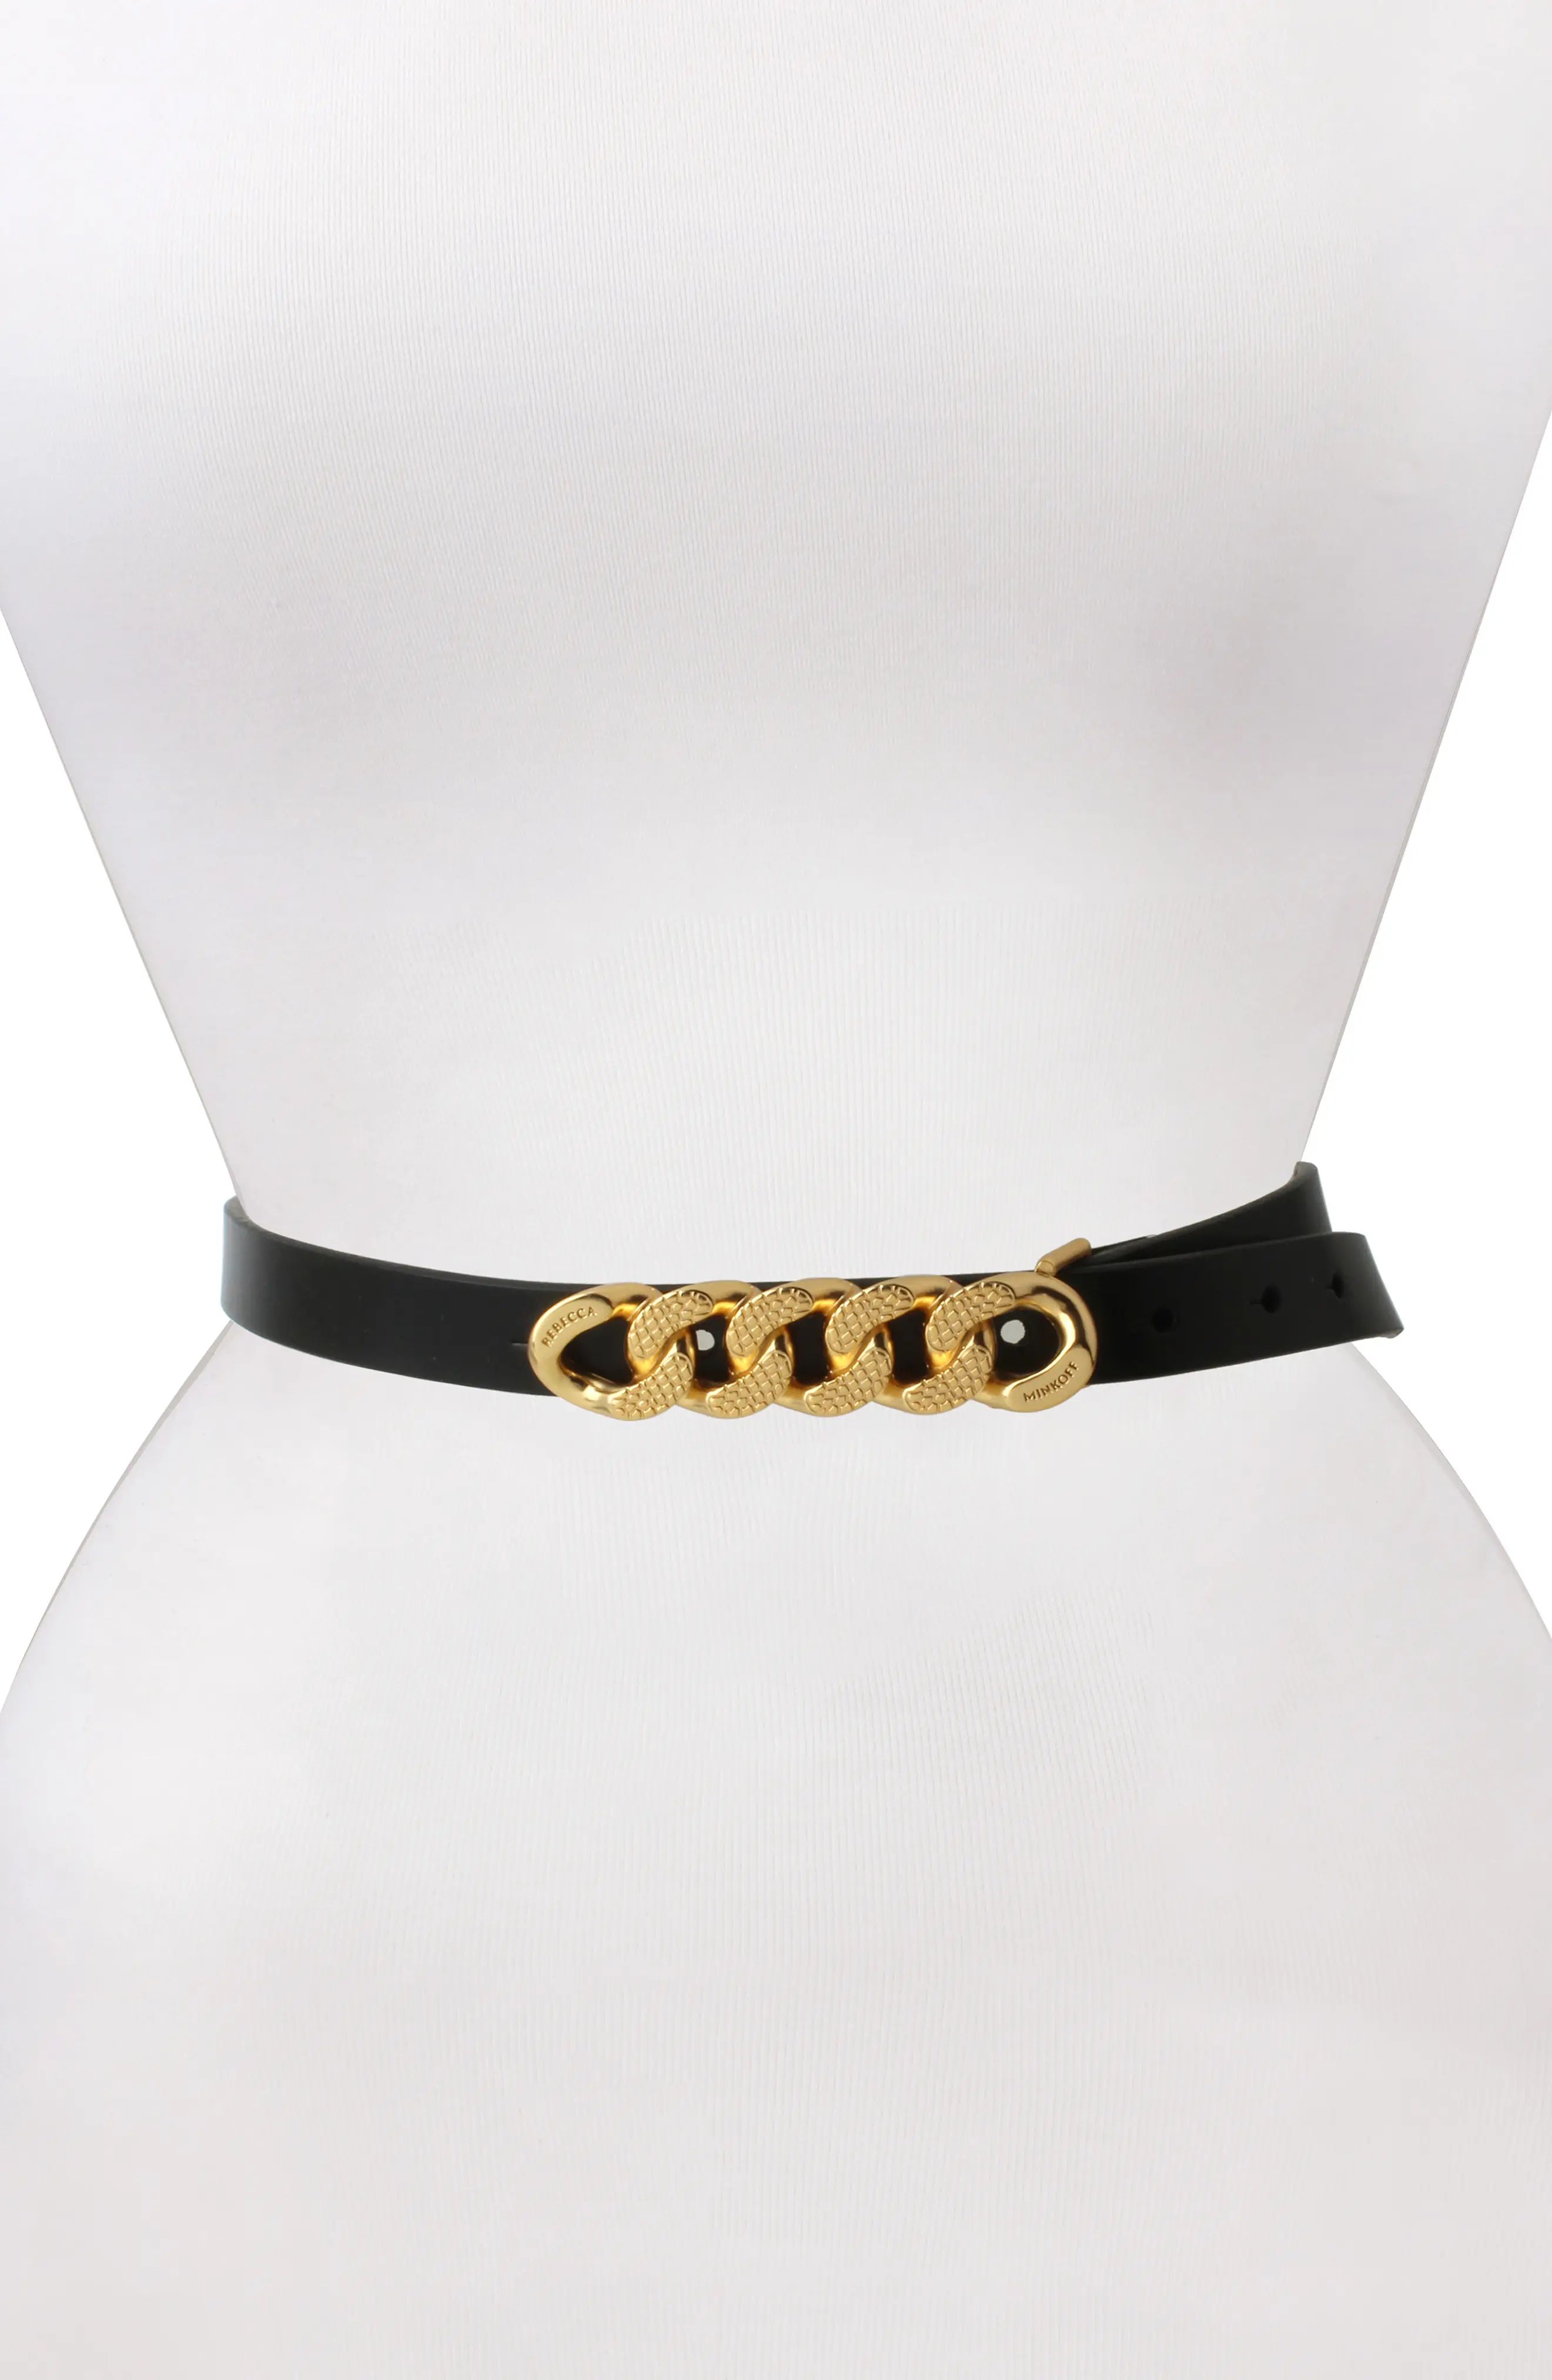 Women's Rebecca Minkoff Chain Detail Leather Belt, Size Large - Black / Polished Brass | Nordstrom